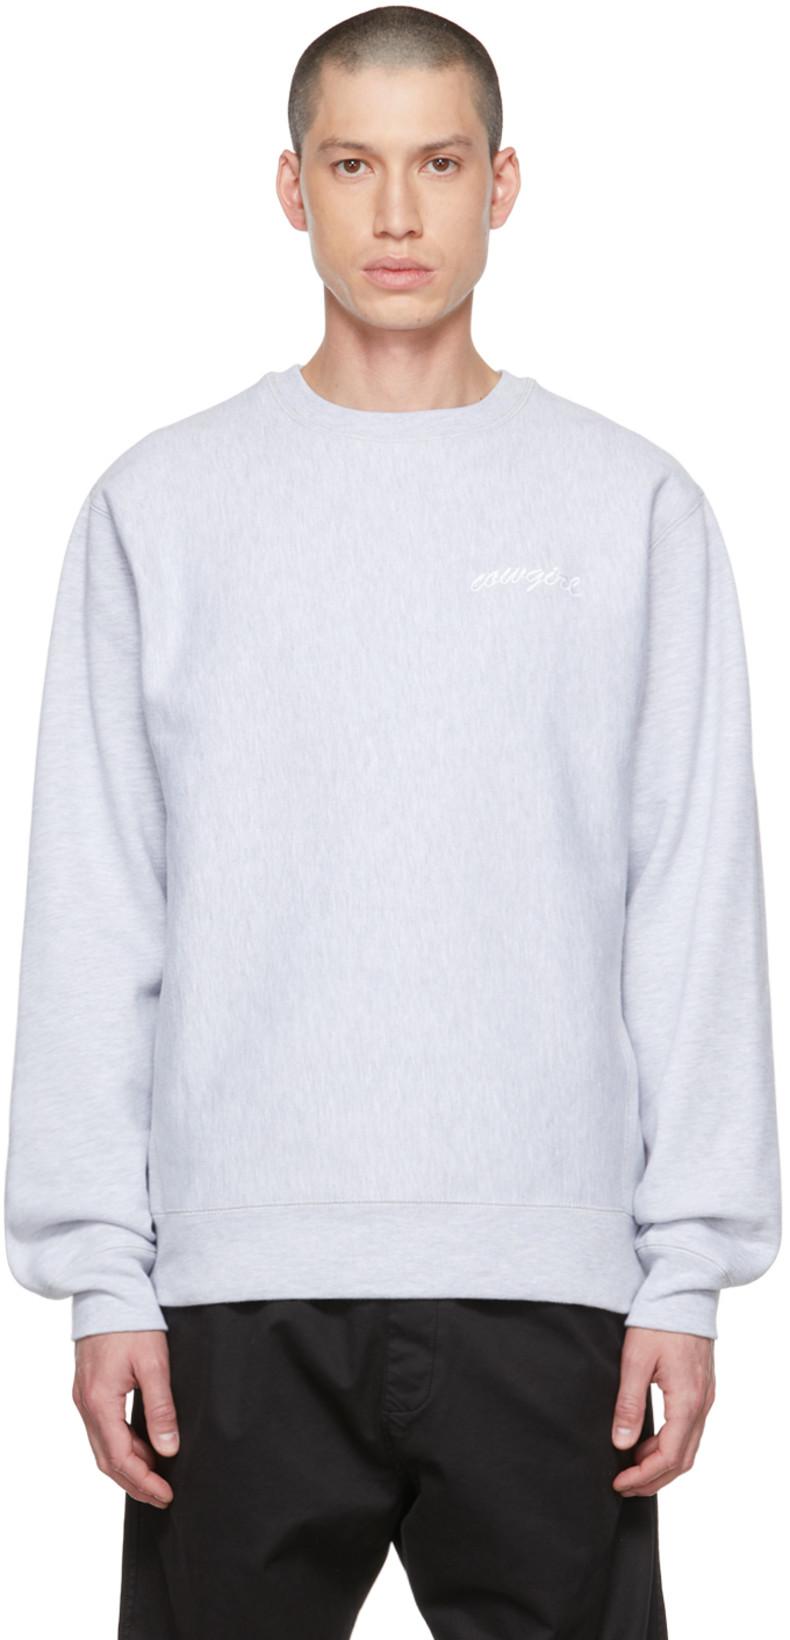 Gray Script Sweatshirt by COWGIRL BLUE CO